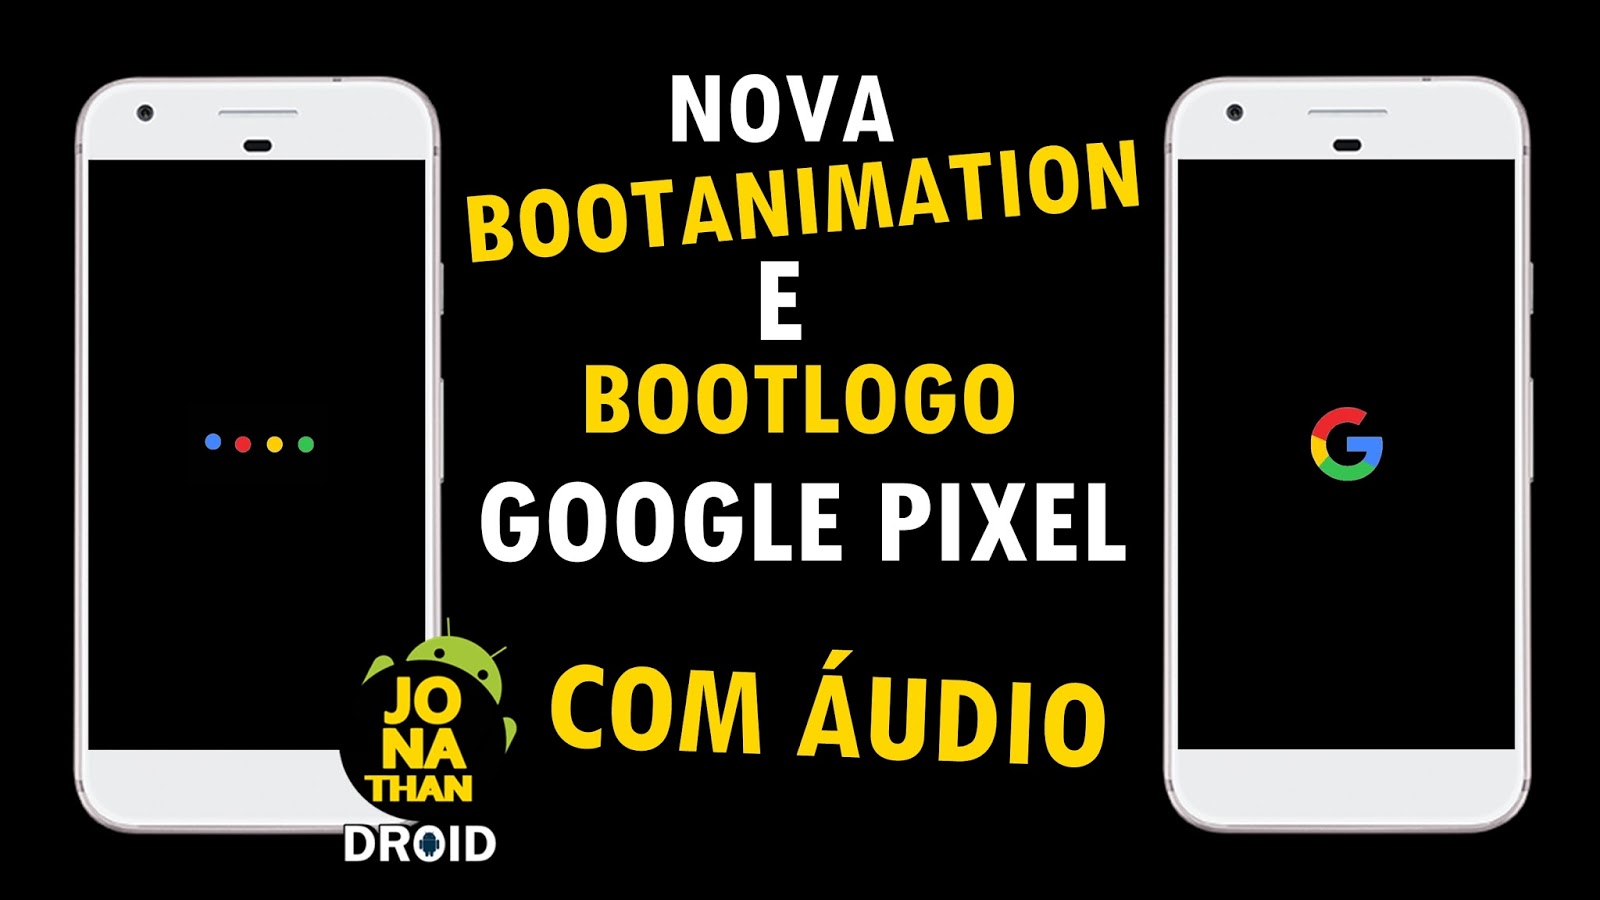 Nova Bootanimation Google Pixel (Com Áudio) + Bootlogo | Para Moto G1, G2,  G3 ~ ..::JONATHANDROID::..